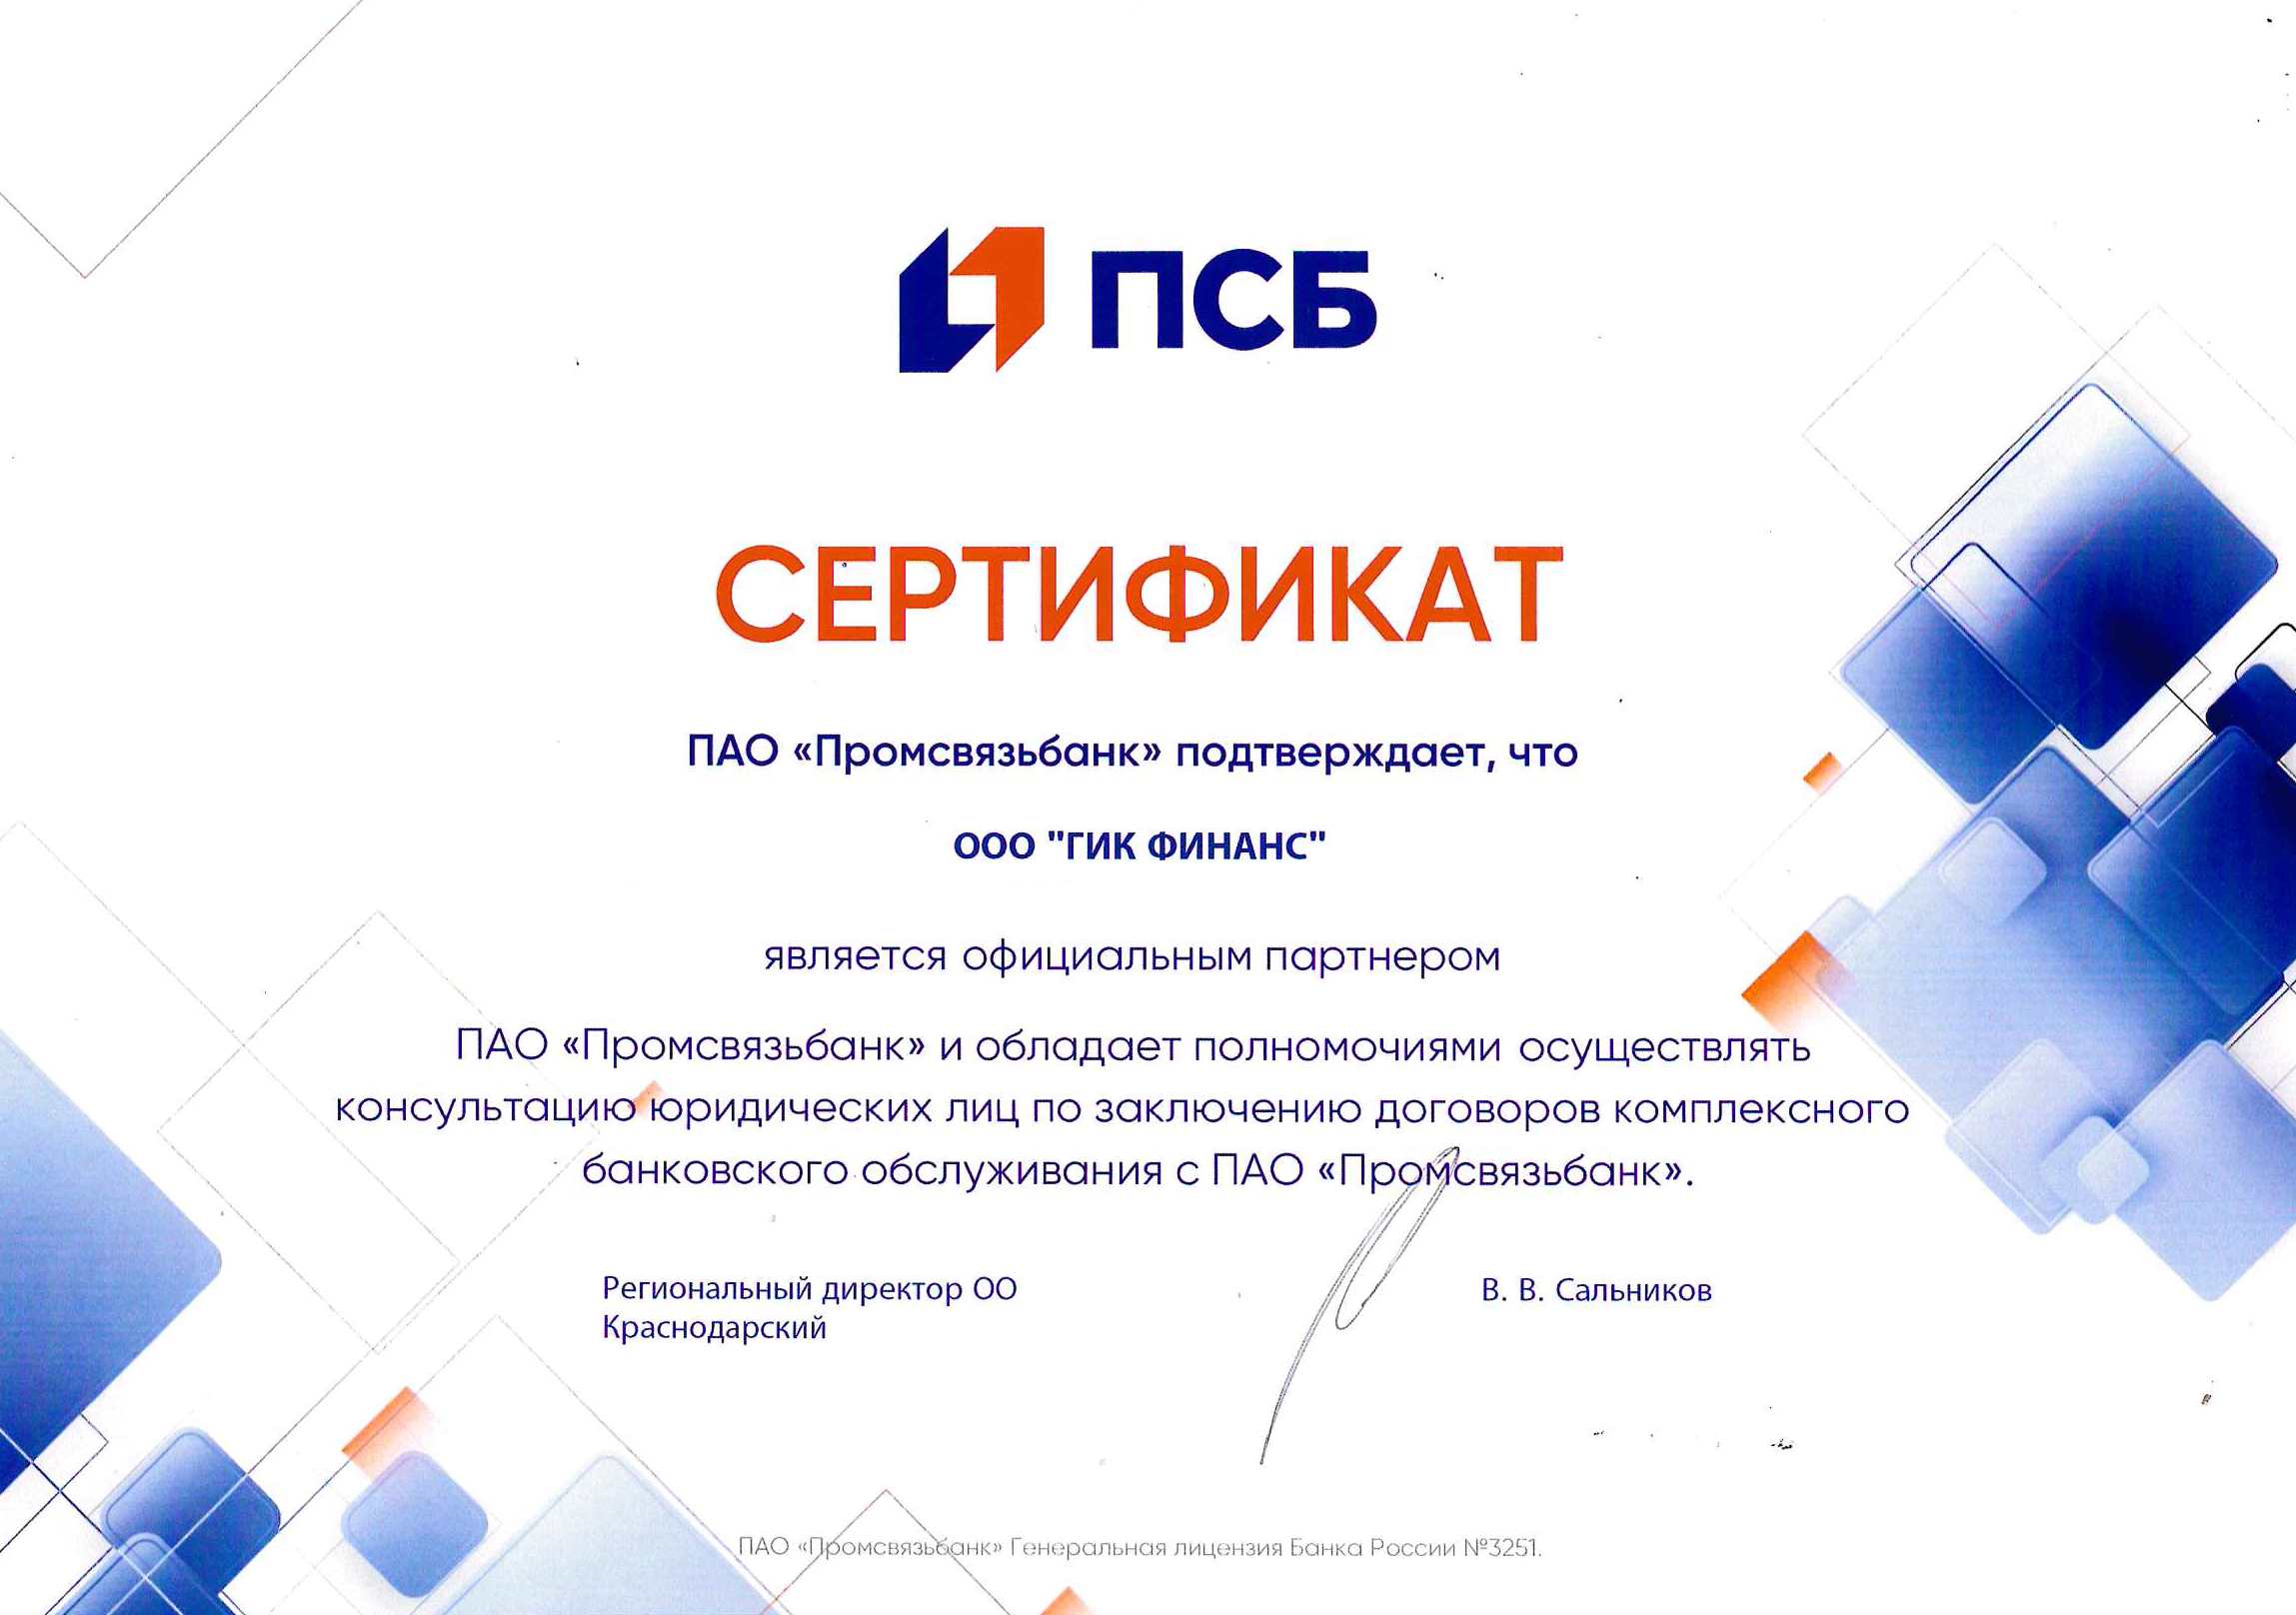 Сертификат о сотрудничестве с ПАО "Промсвязьбанк"